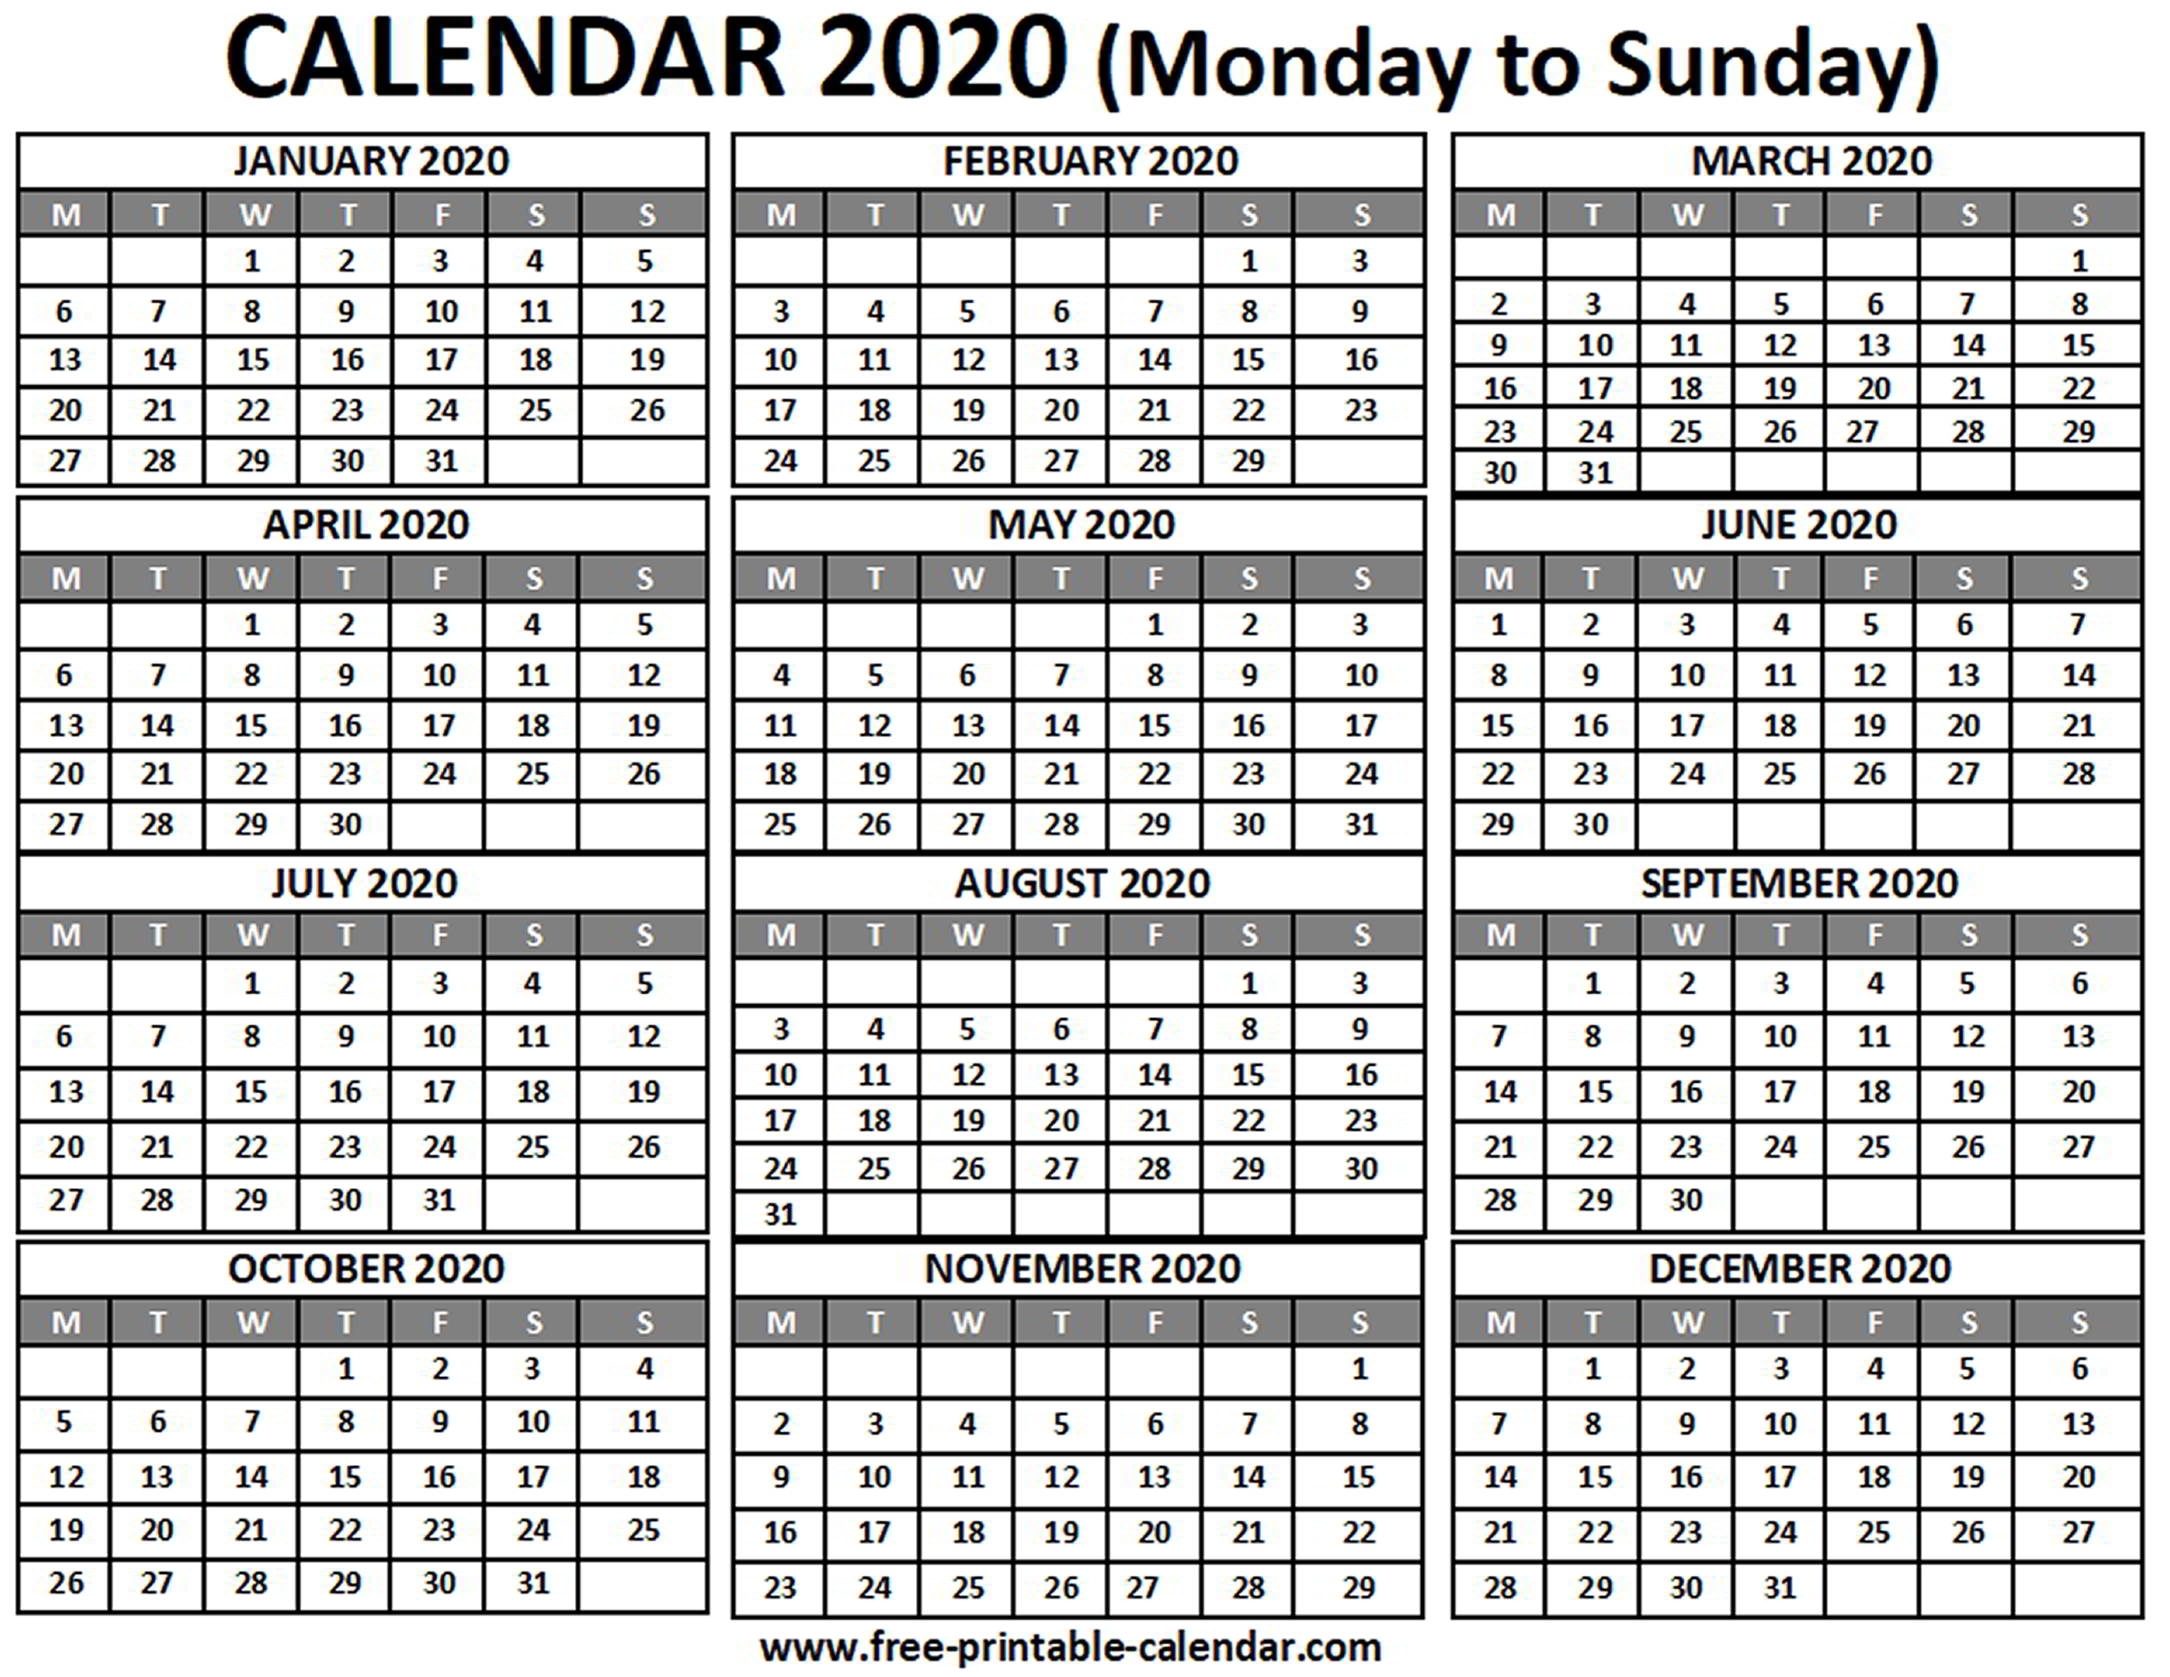 2020 Calendar - Free-Printable-Calendar for 2020 Printable Calendars Beginning With Monday